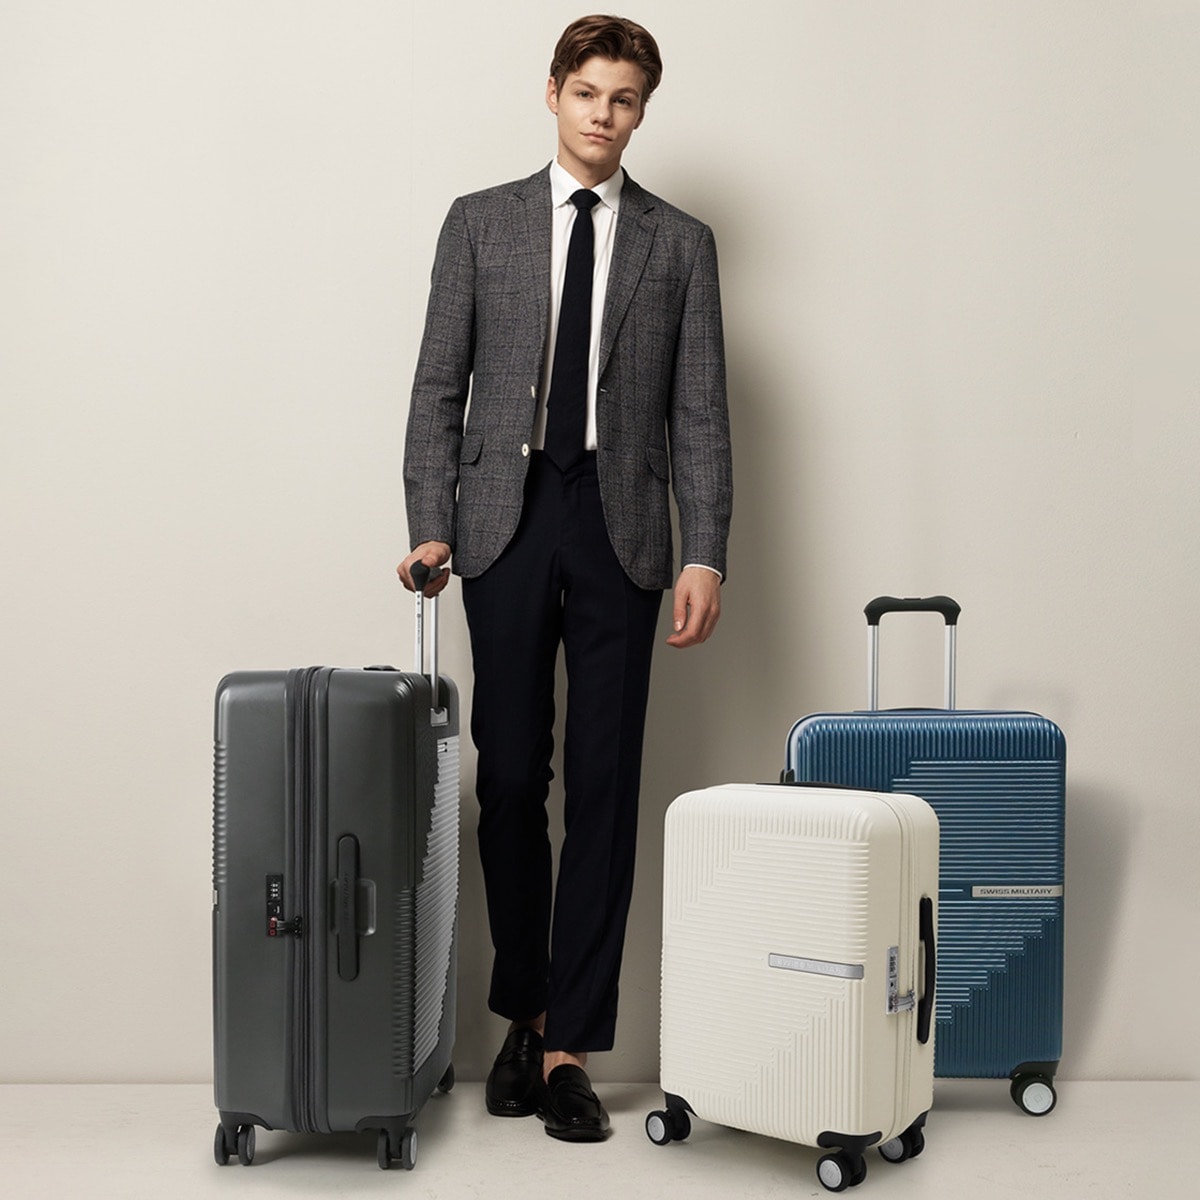 スーツケース Mサイズ 4～6泊 66cm 74/88L 5cm拡張 TSAロック スーツ 